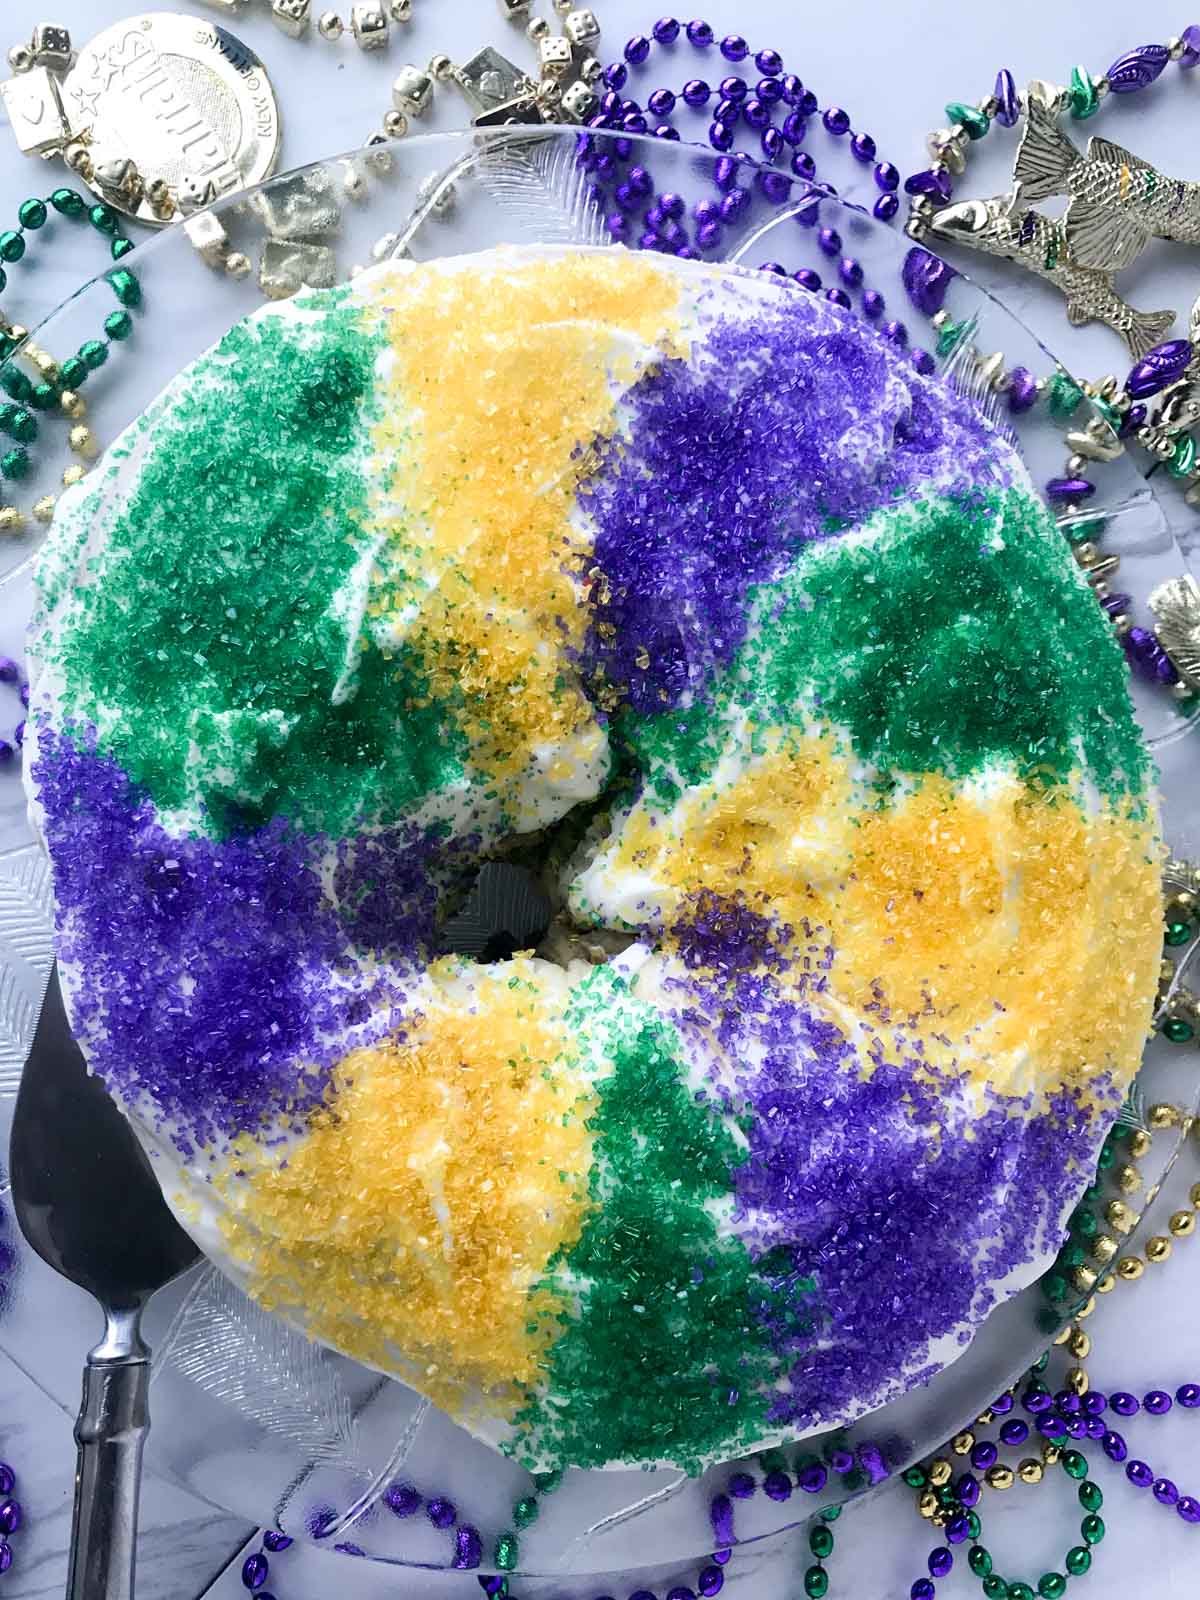 King cake with Mardi Gras beads surrounding it